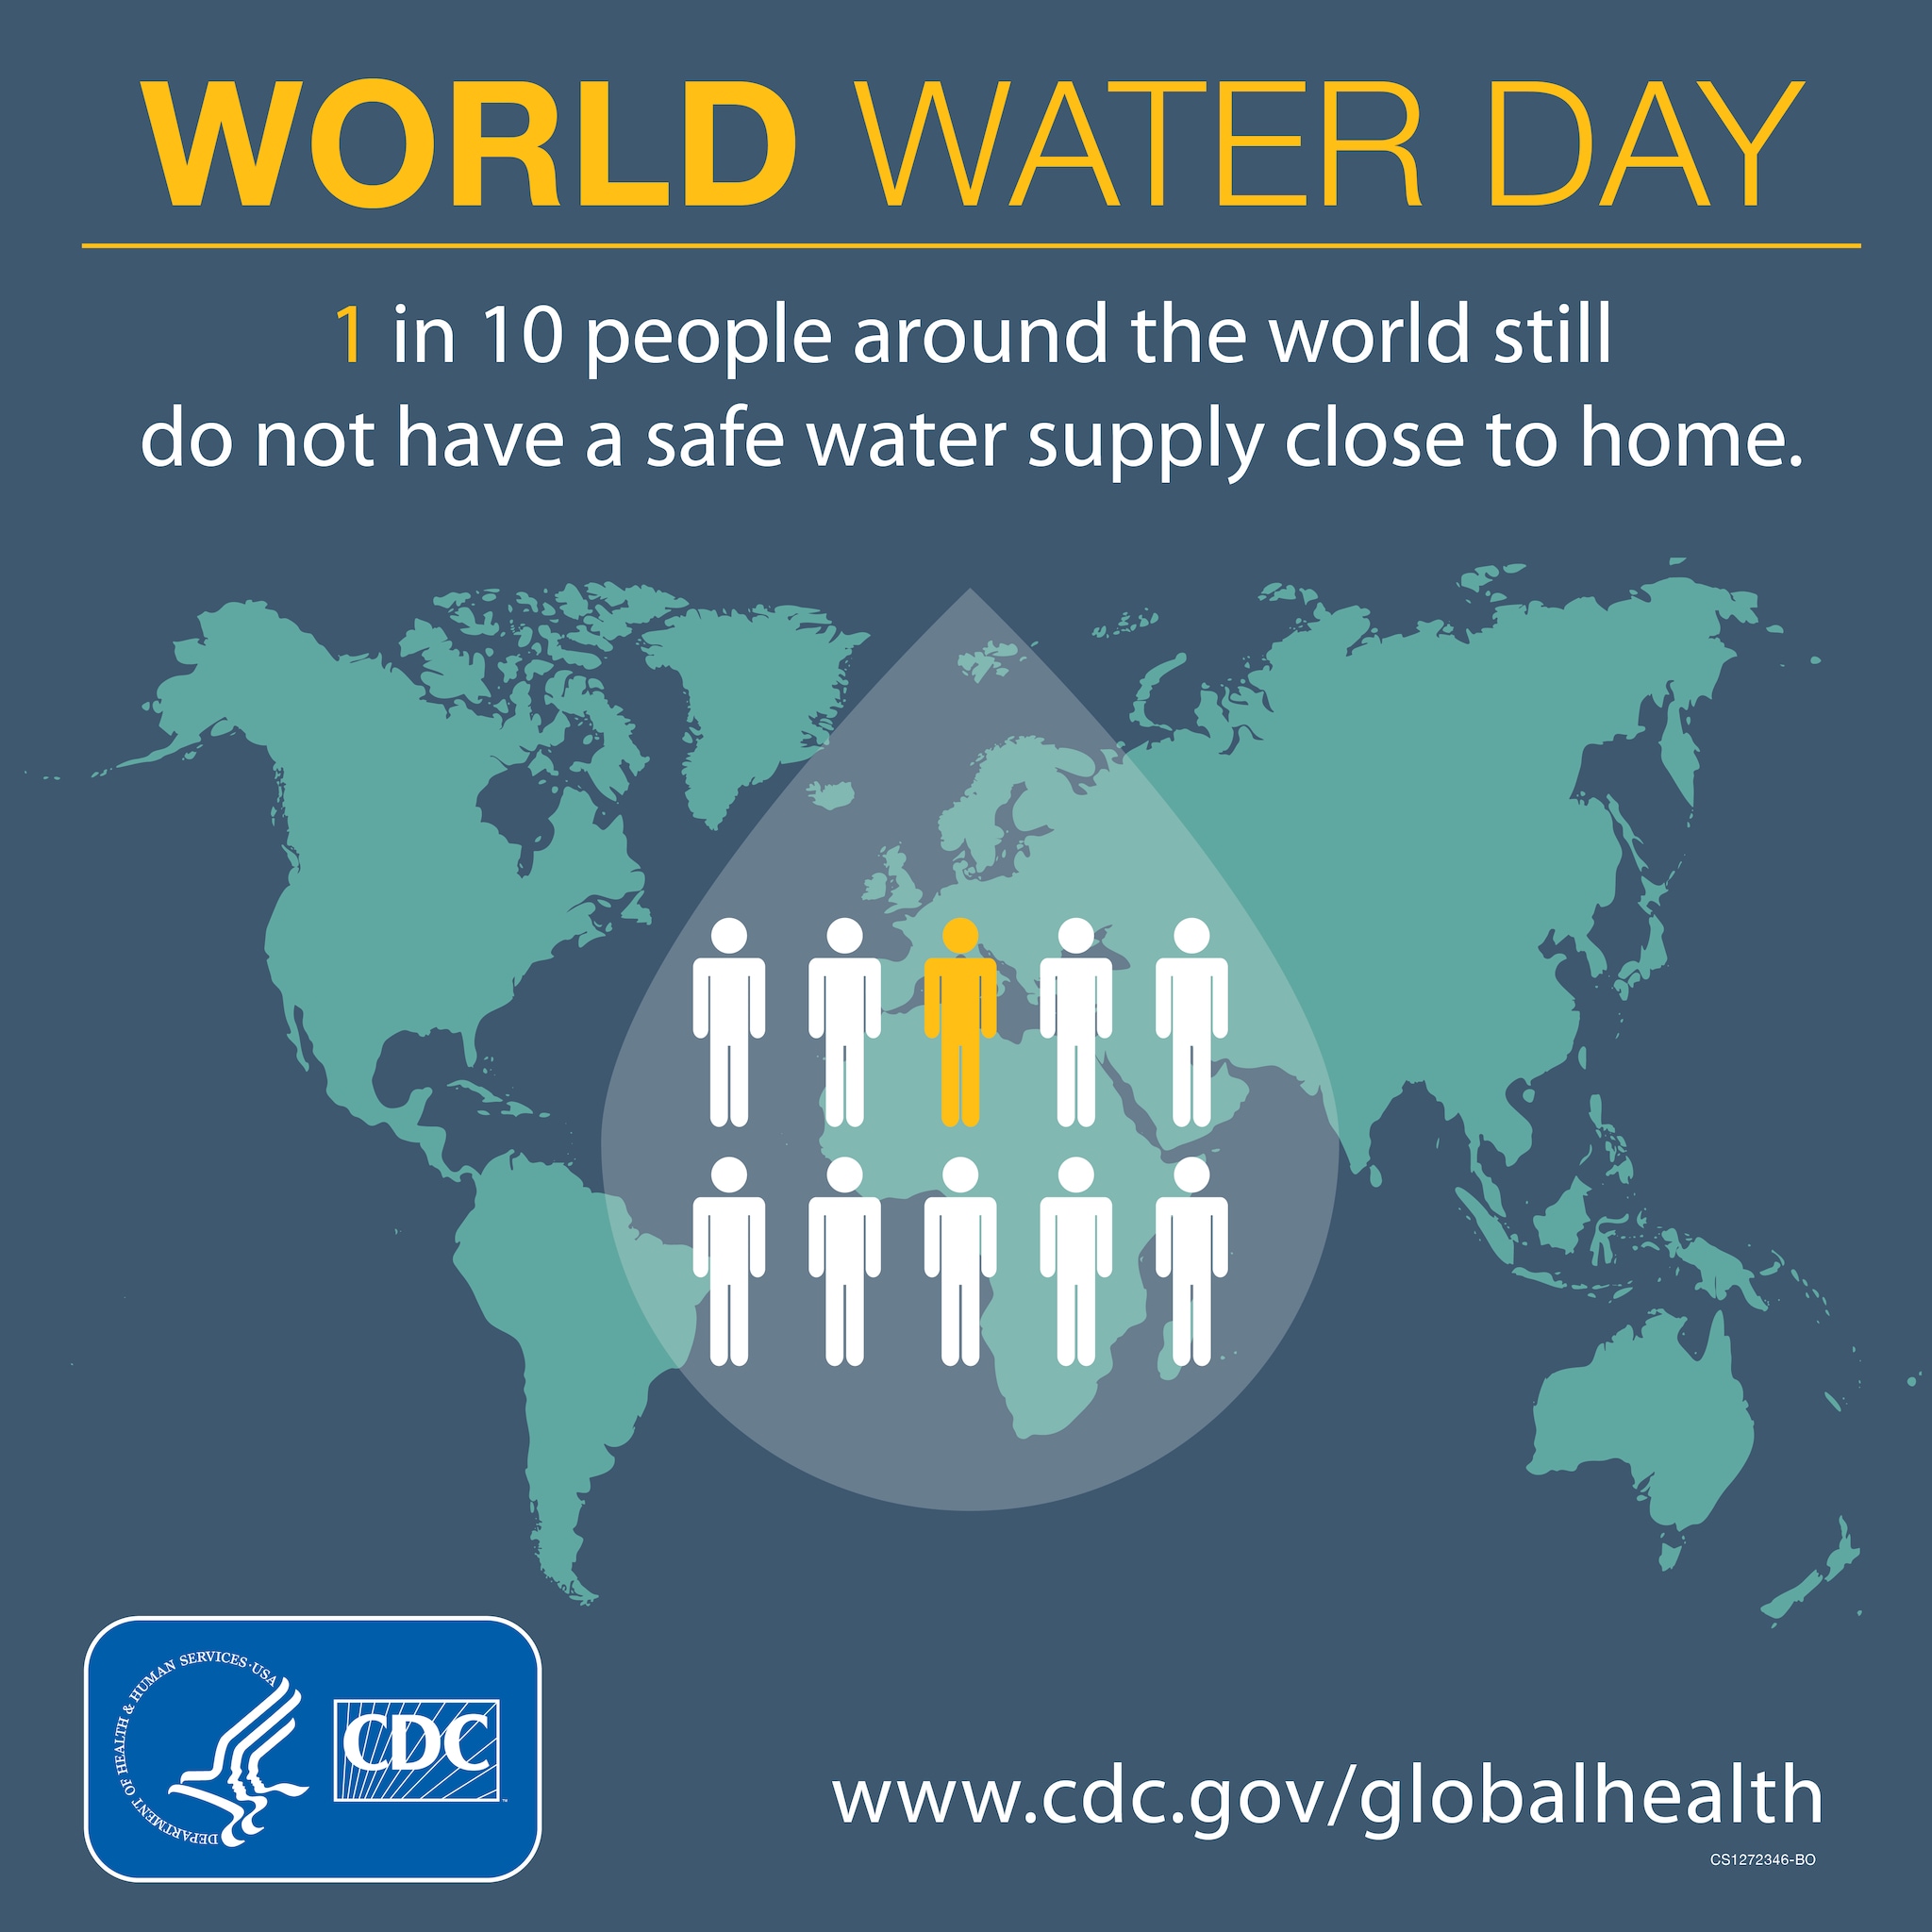  World Water Day